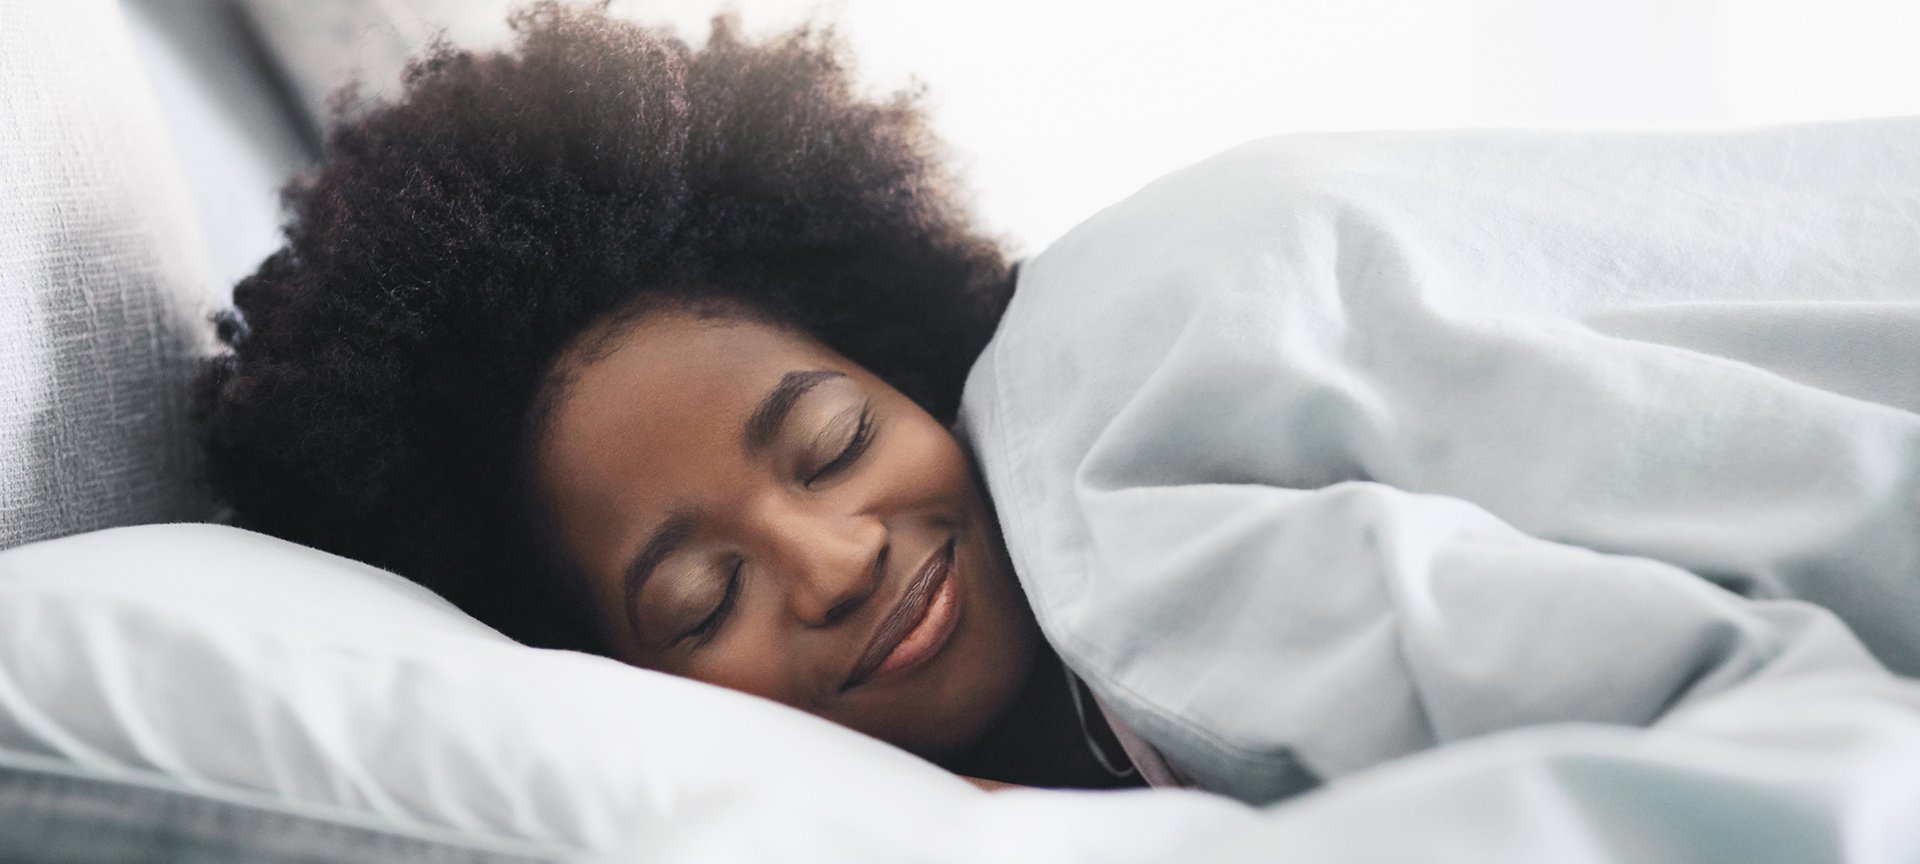 How To Tie Hair While Sleeping - Pure Sense